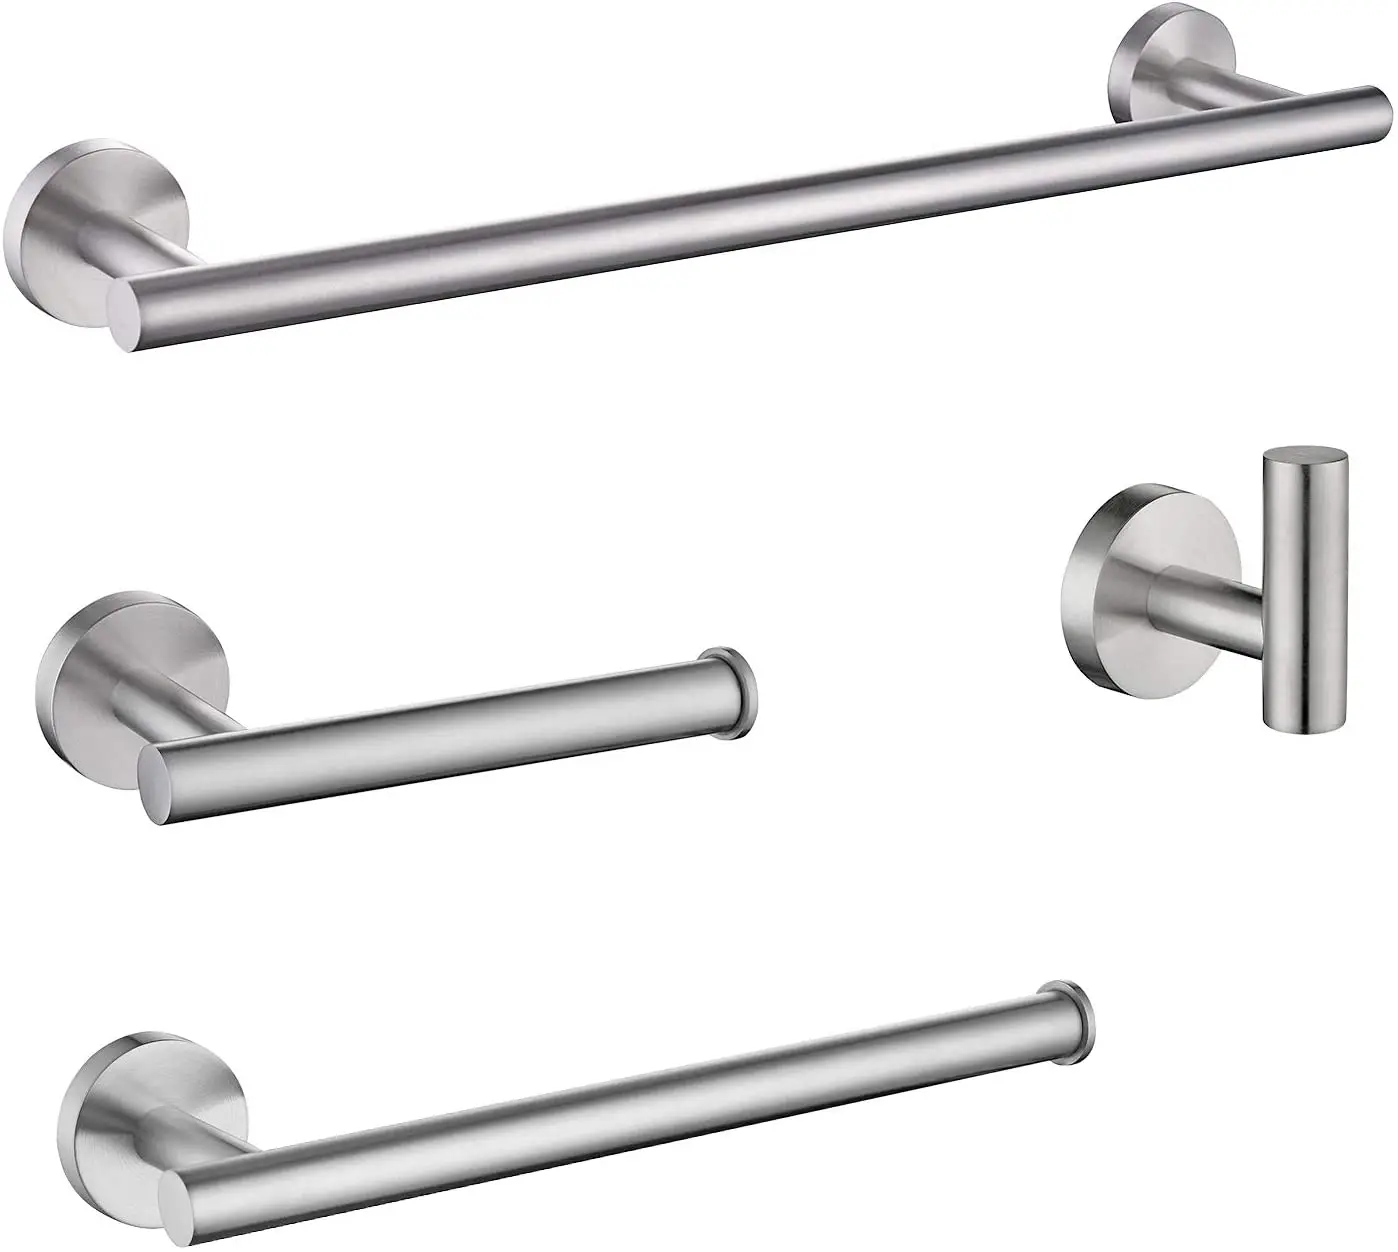 Bathroom Hardware 4-PCS Set Towel Bar Ring Hook Holder Accessory Brushed Nickel 